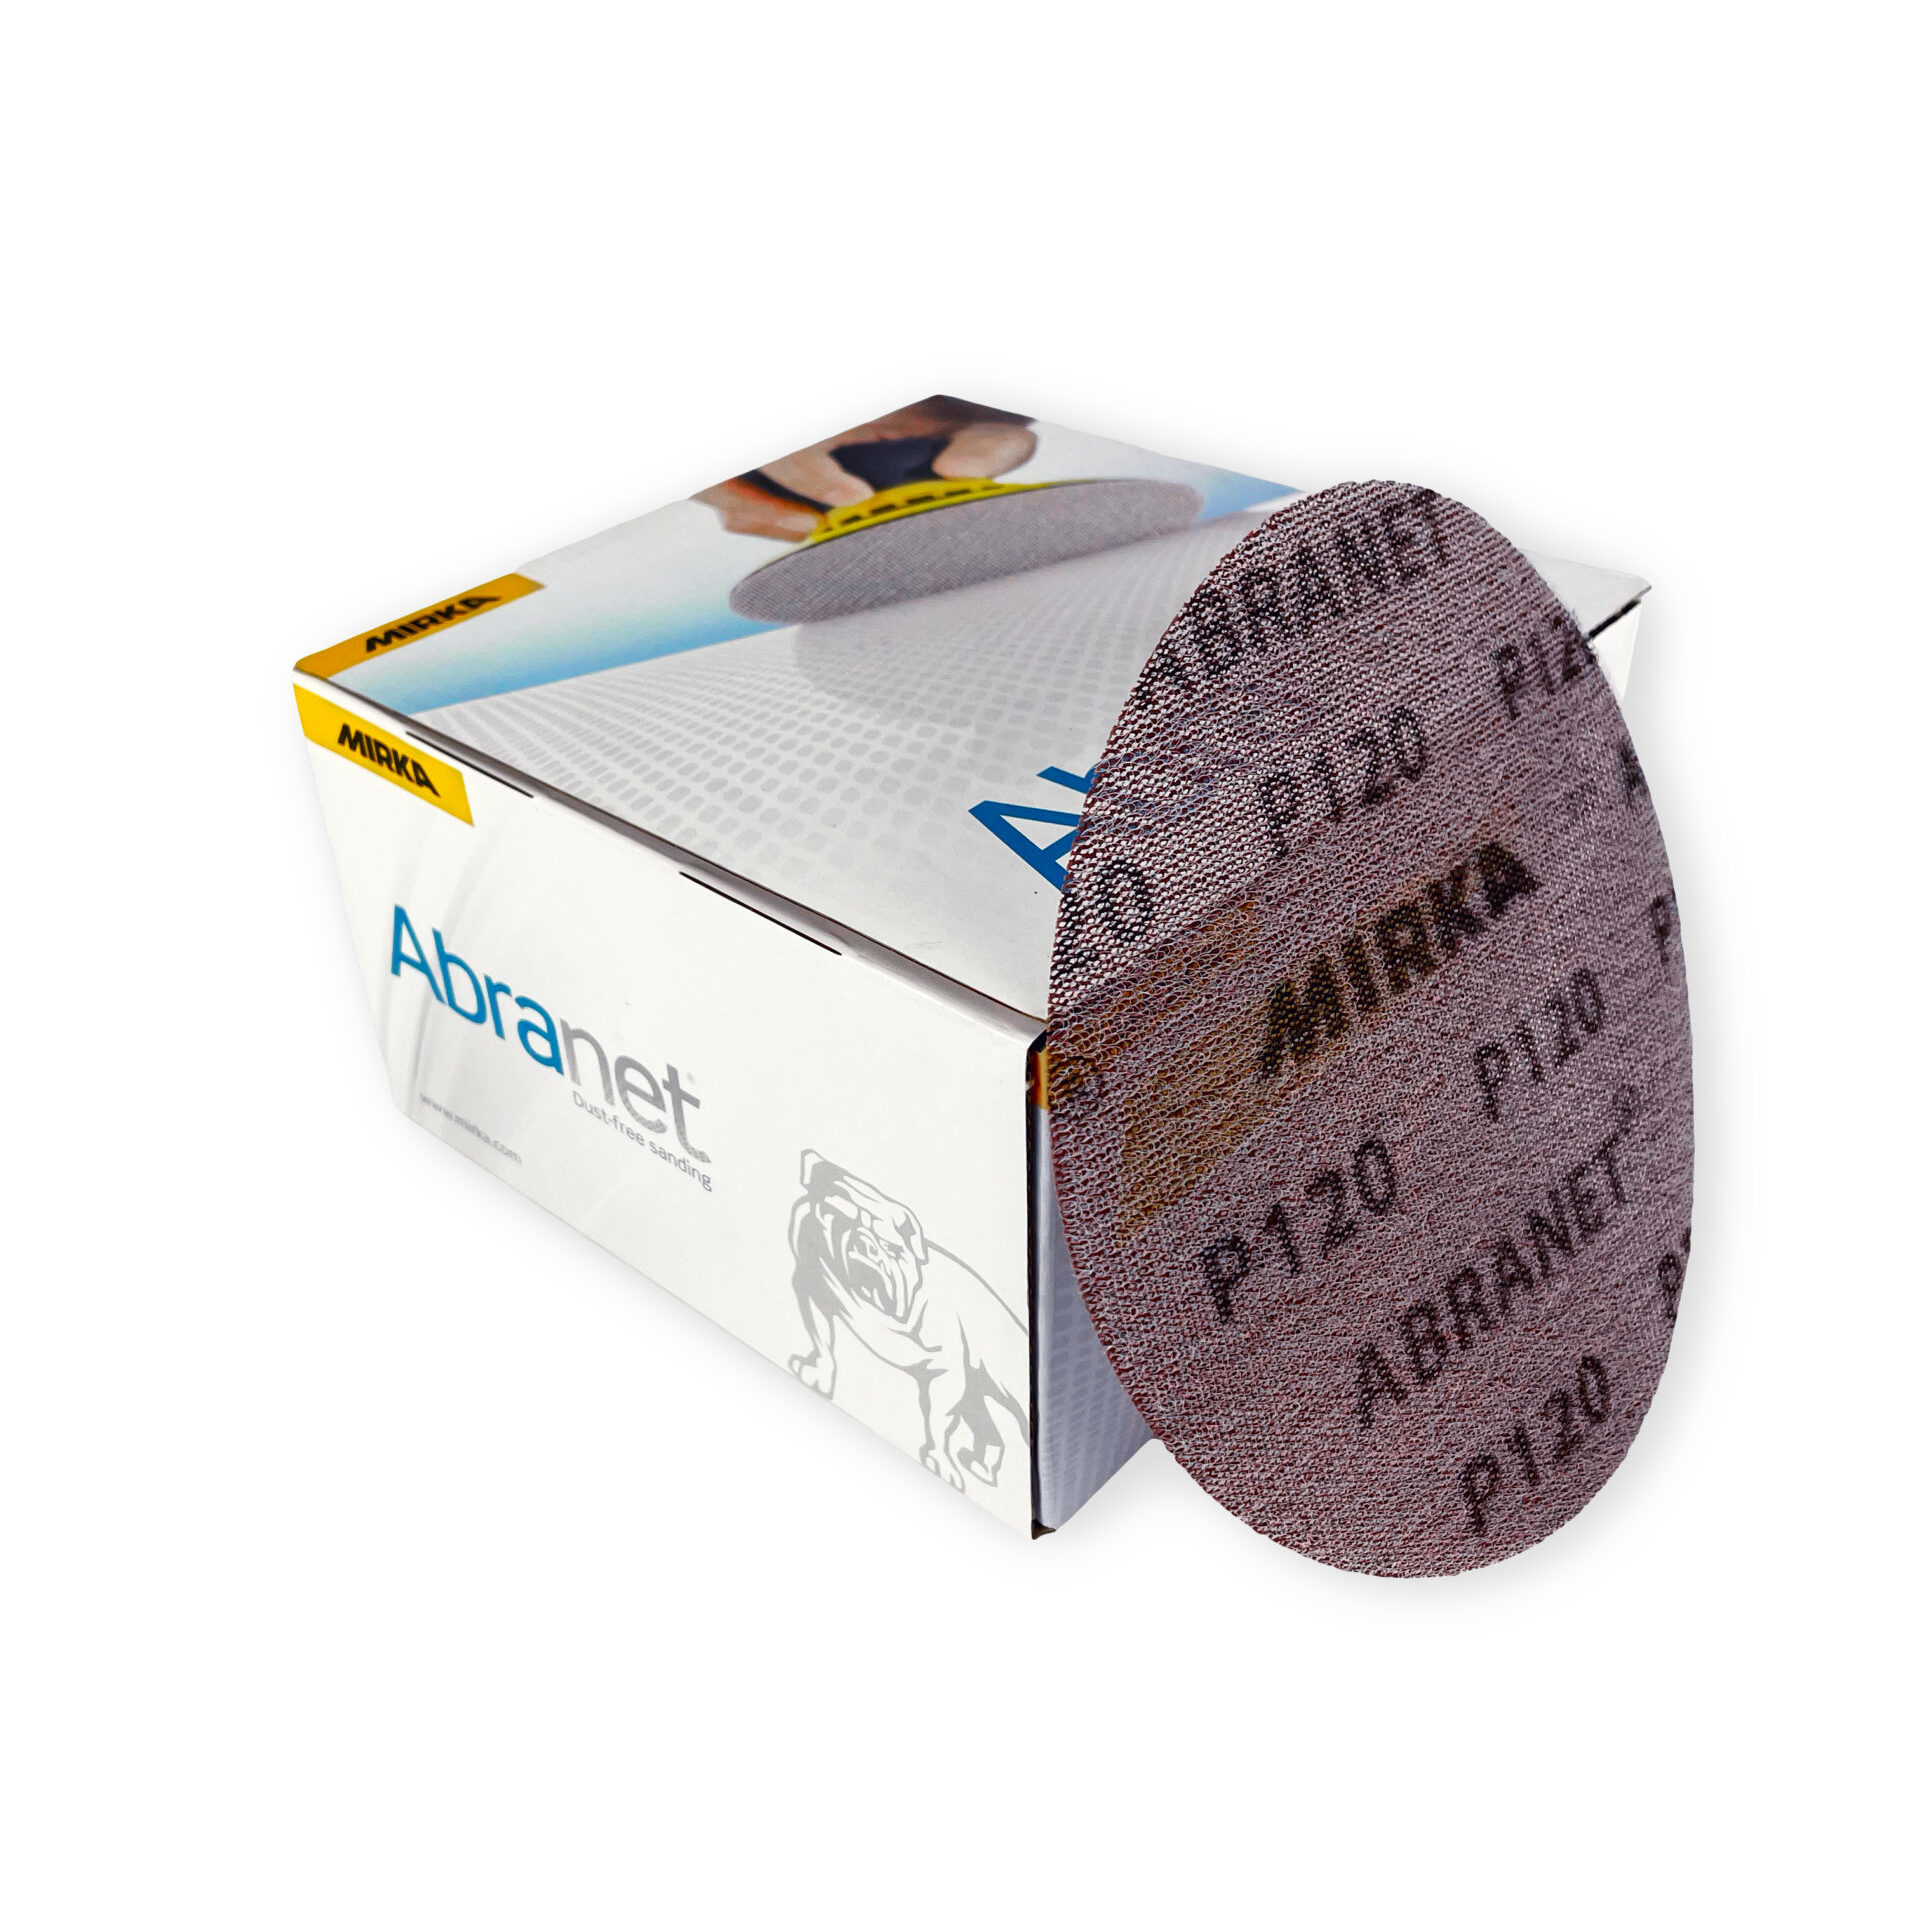 Mirka Abranet 6 inch Dust-Free Sanding Discs Box of 50